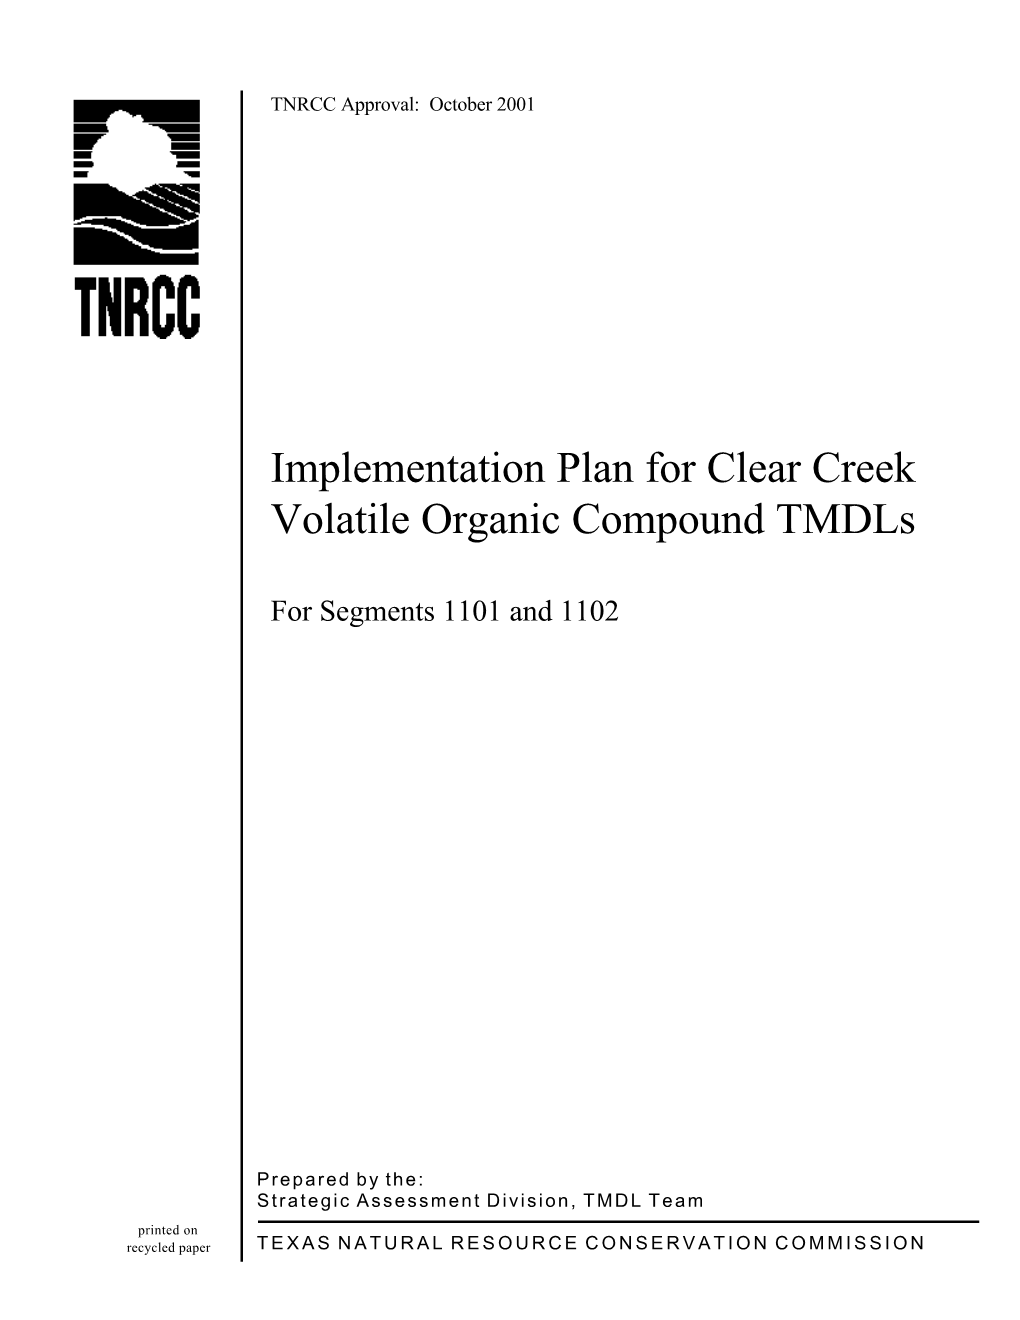 Implementation Plan for Clear Creek VOC Tmdls